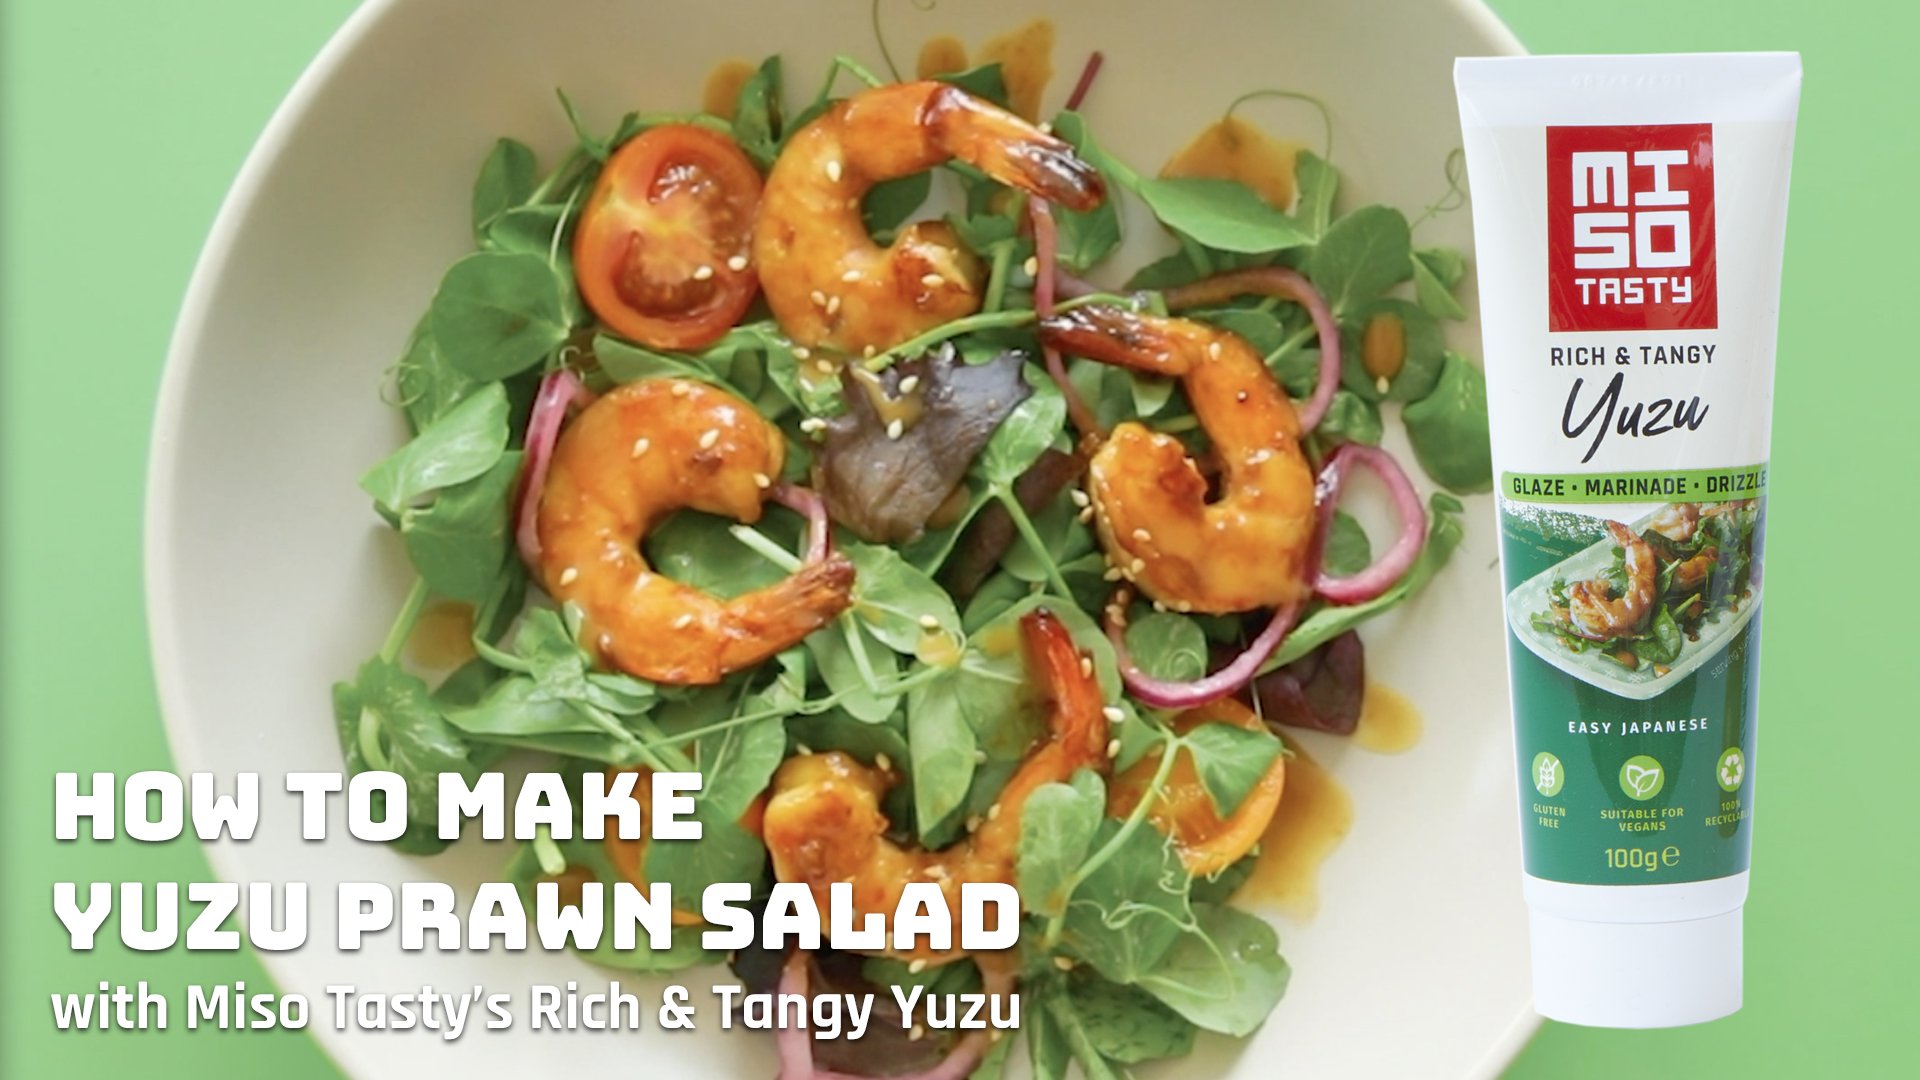 Miso Tasty’s Quick Yuzu Prawn Salad